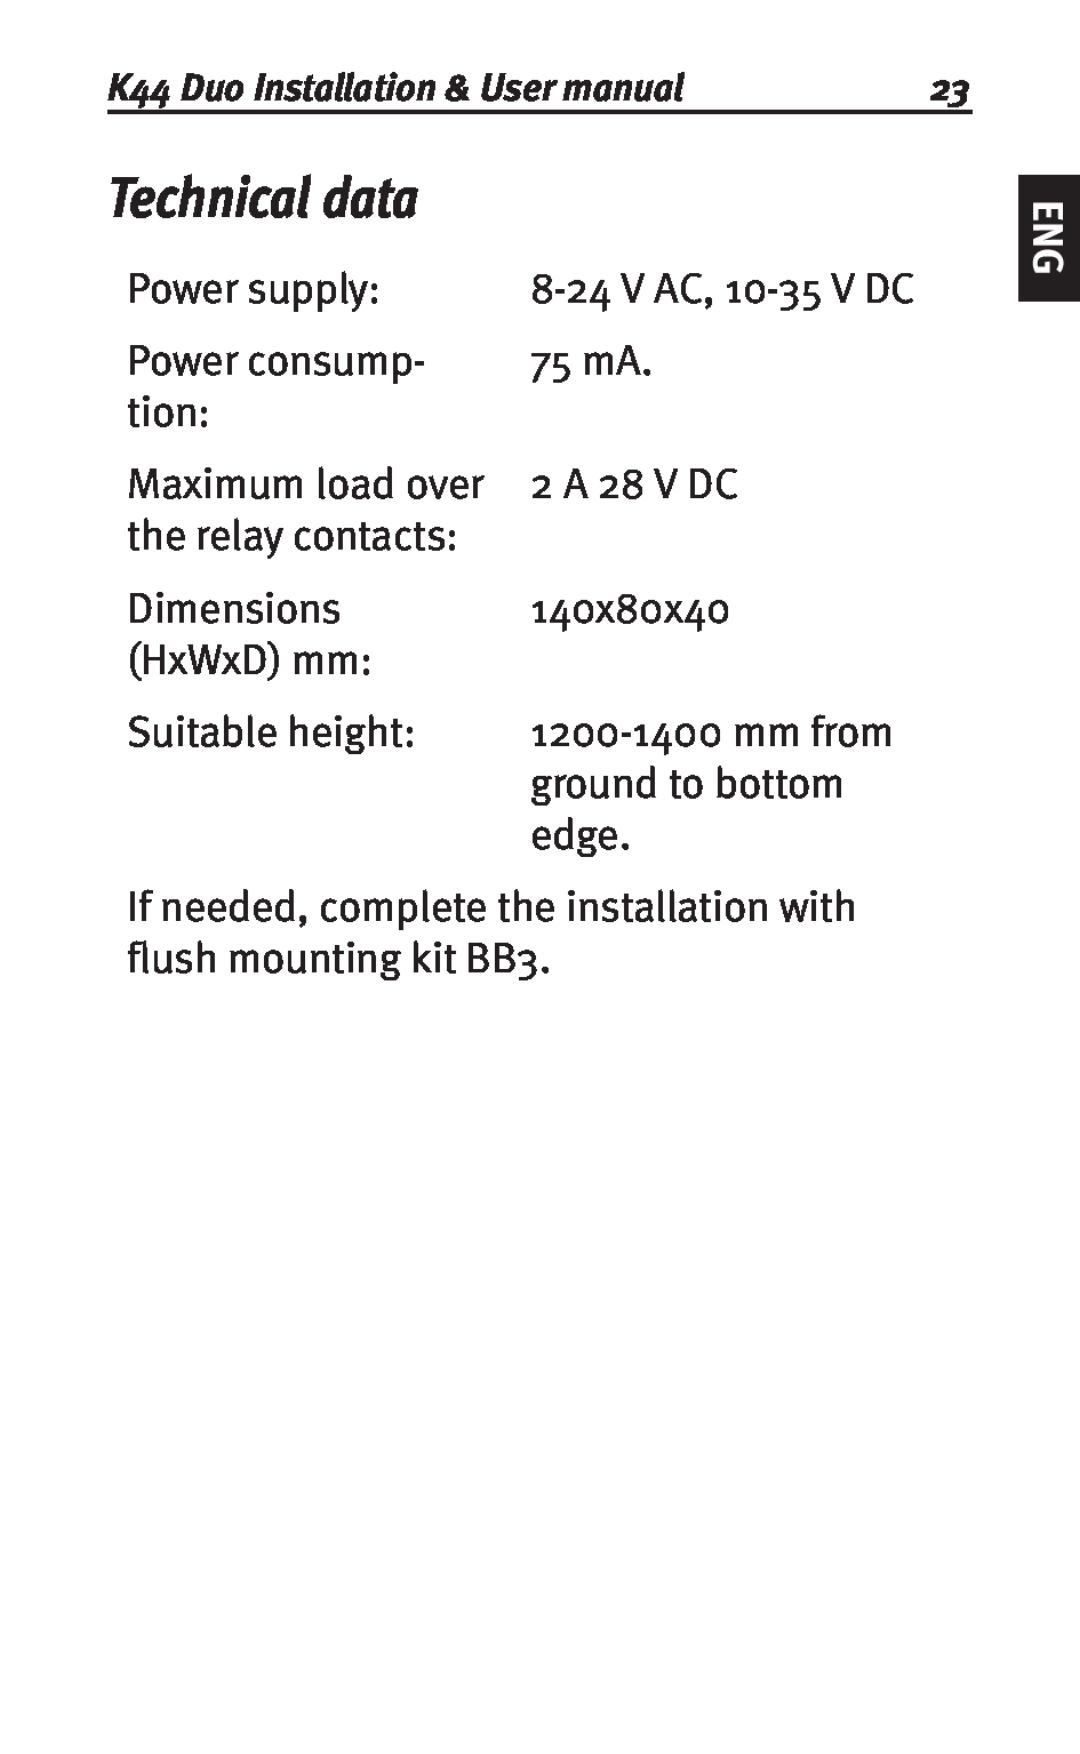 Siemens K44 user manual Technical data 